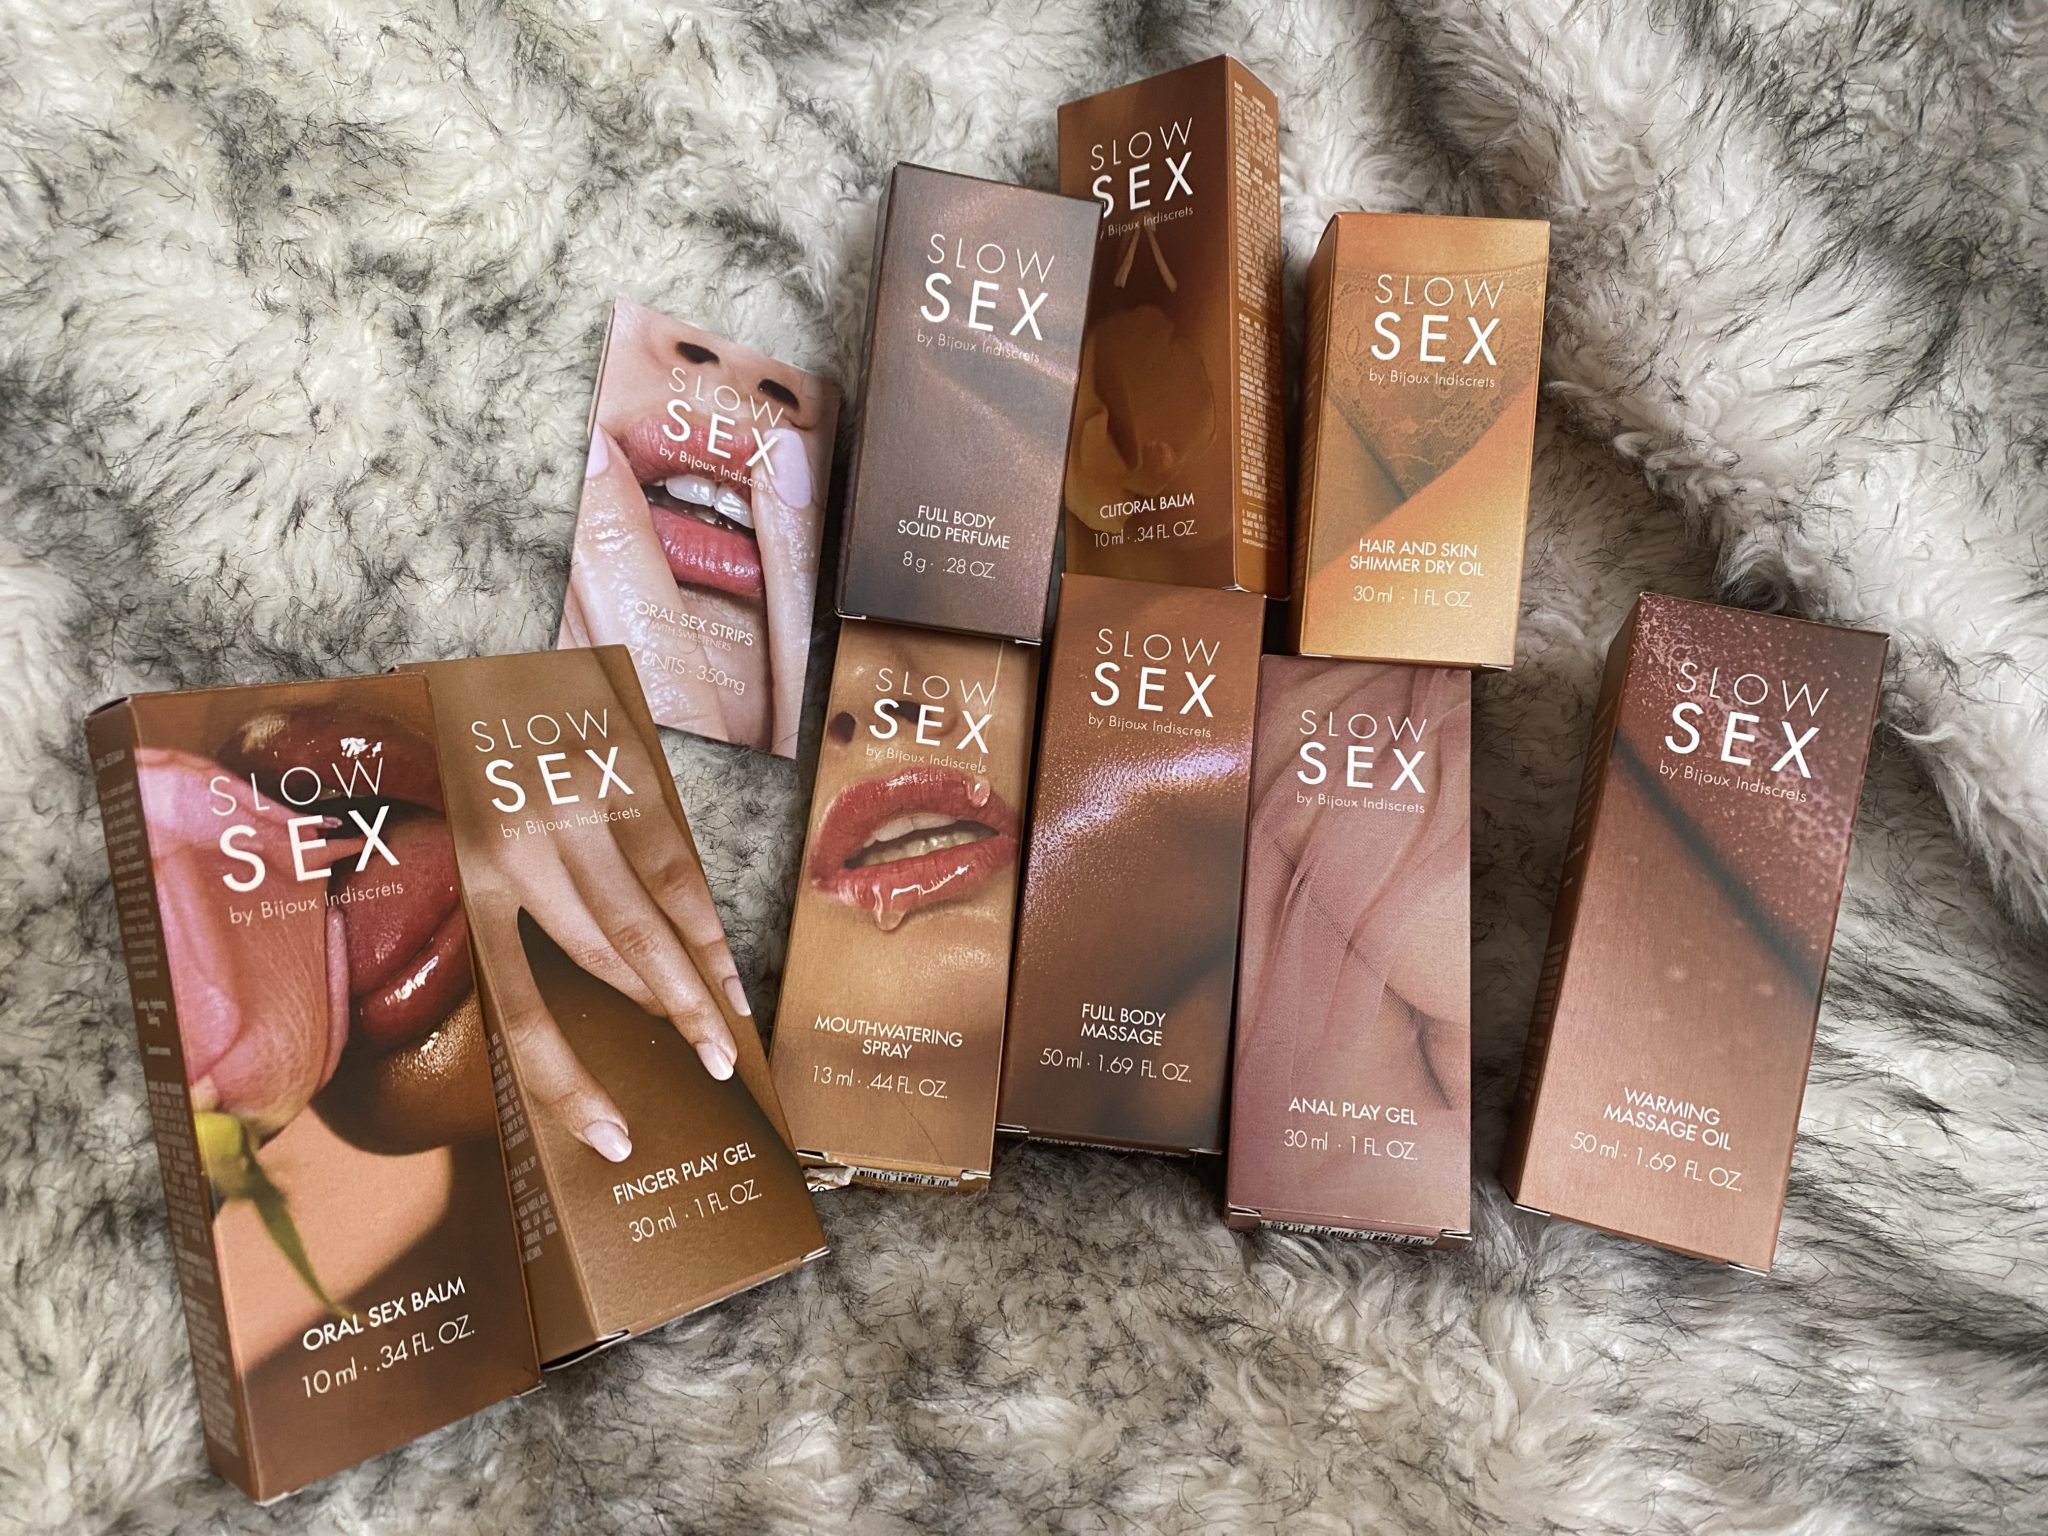 Bijoux Indescrets Slow Sex Experience Box Review photo